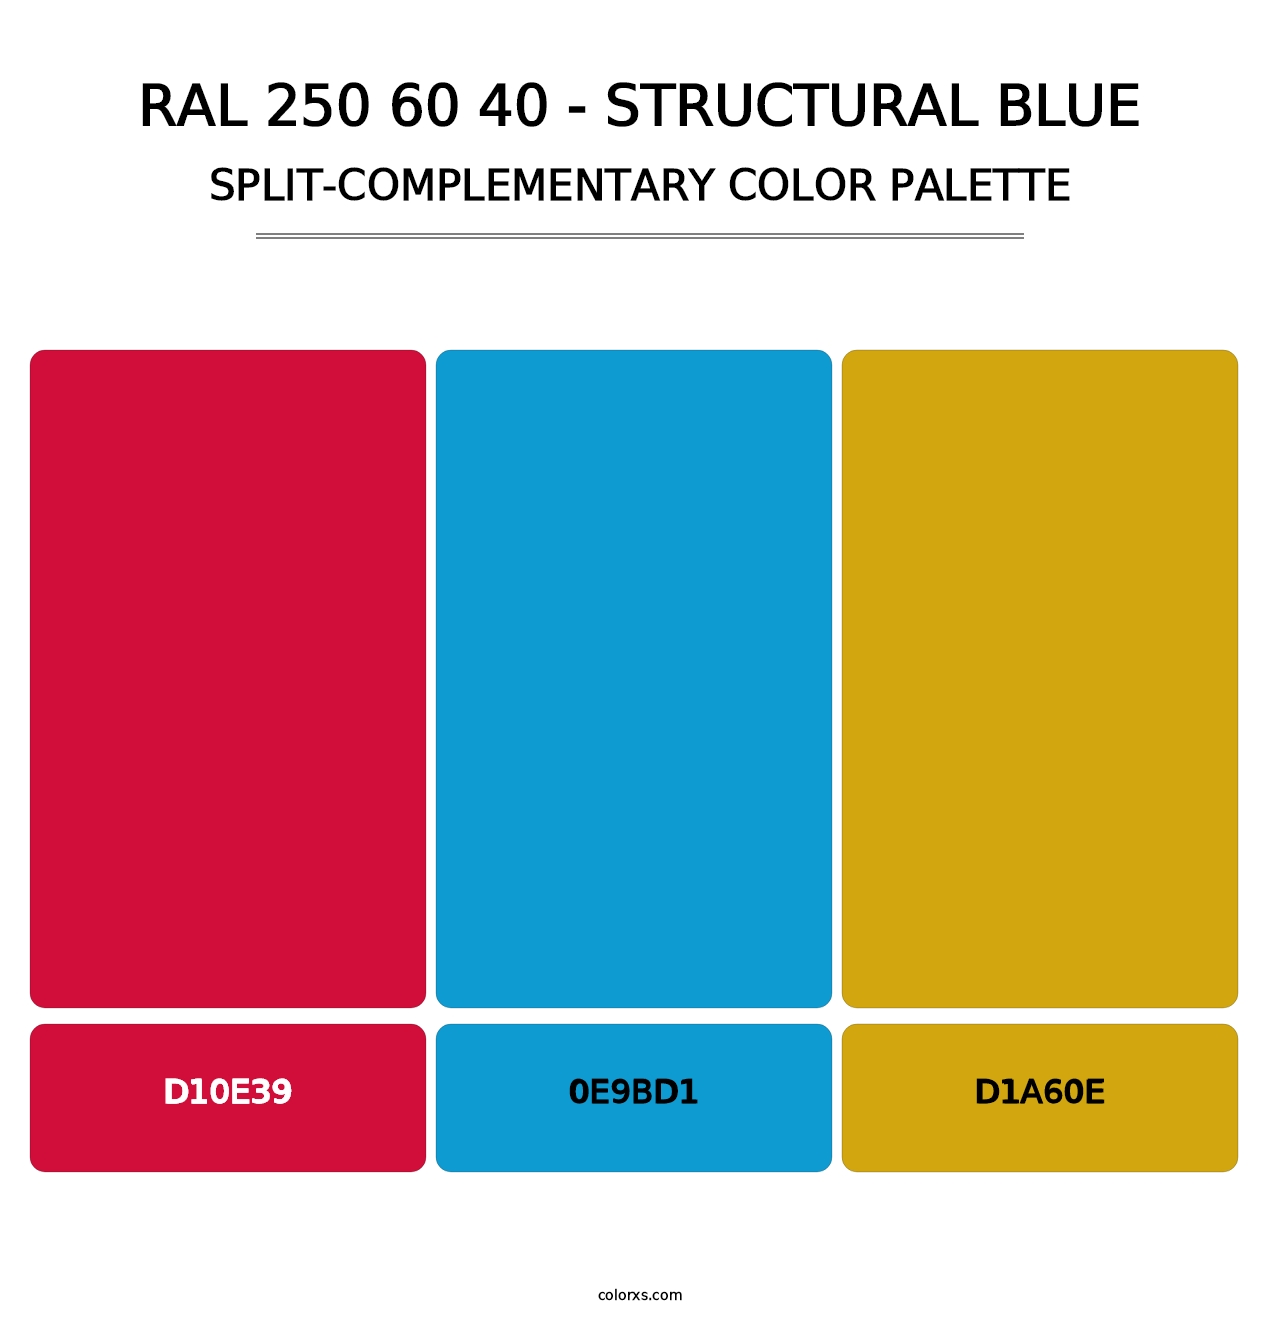 RAL 250 60 40 - Structural Blue - Split-Complementary Color Palette